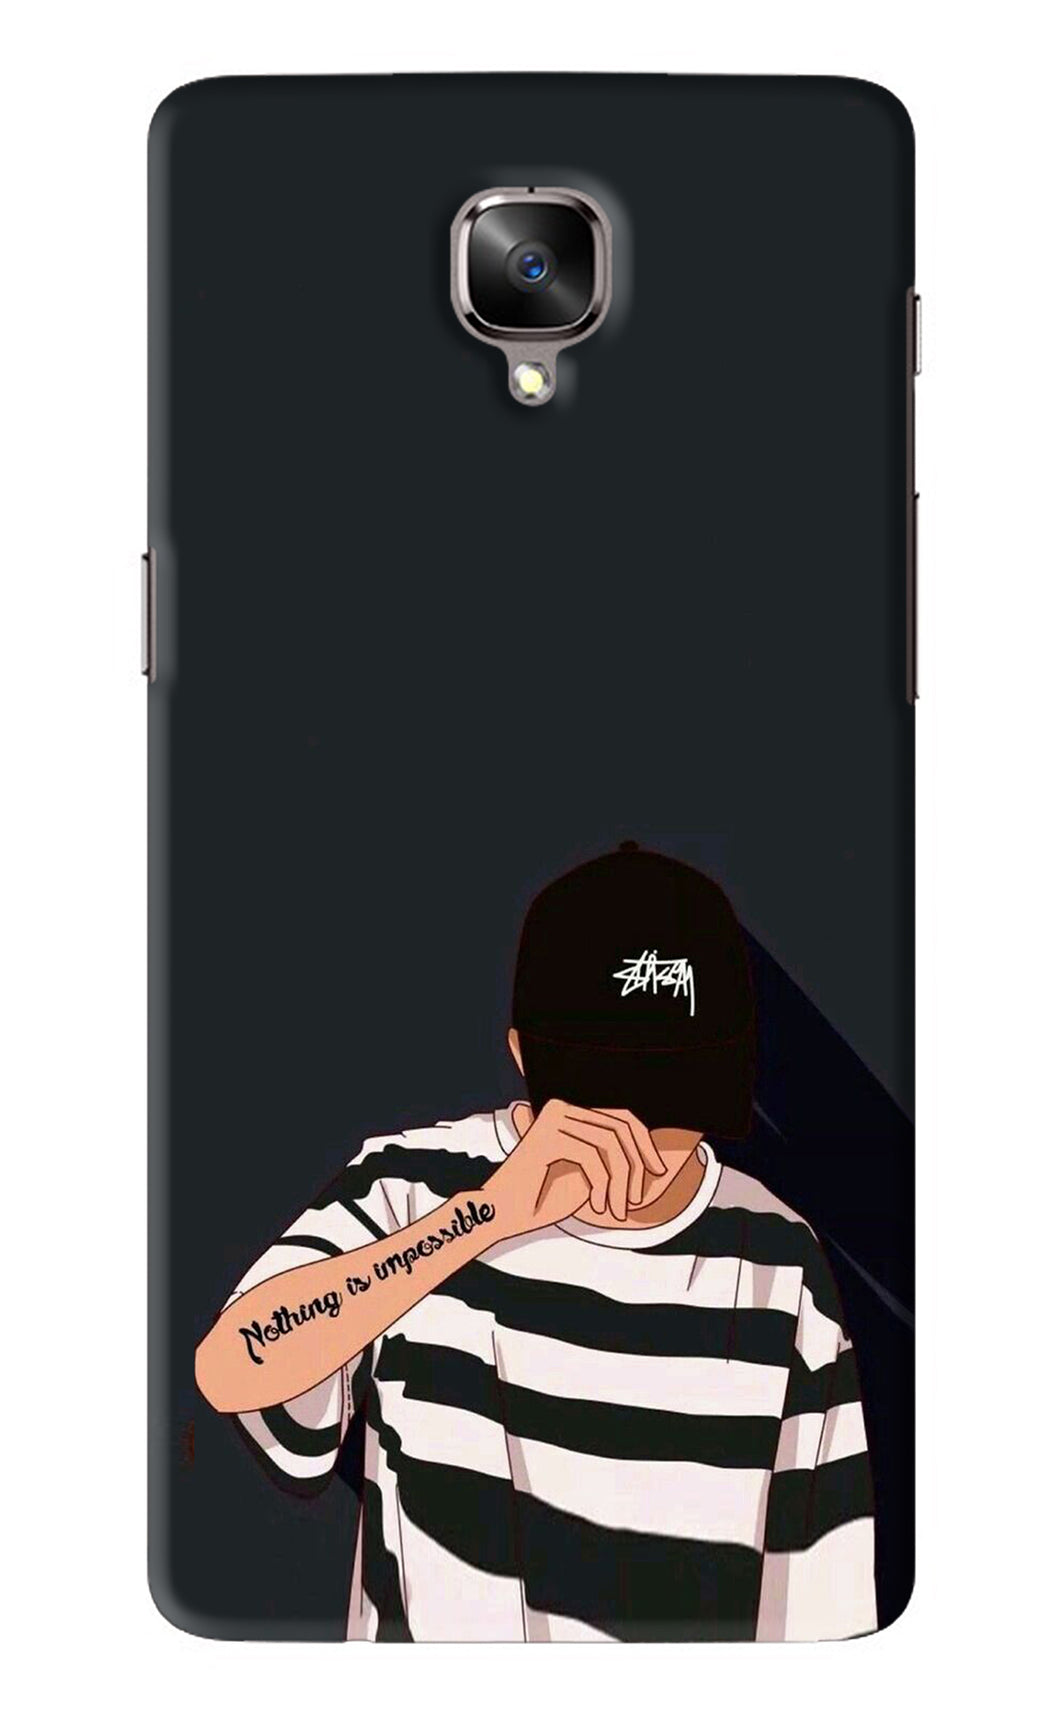 Aesthetic Boy OnePlus 3 Back Skin Wrap